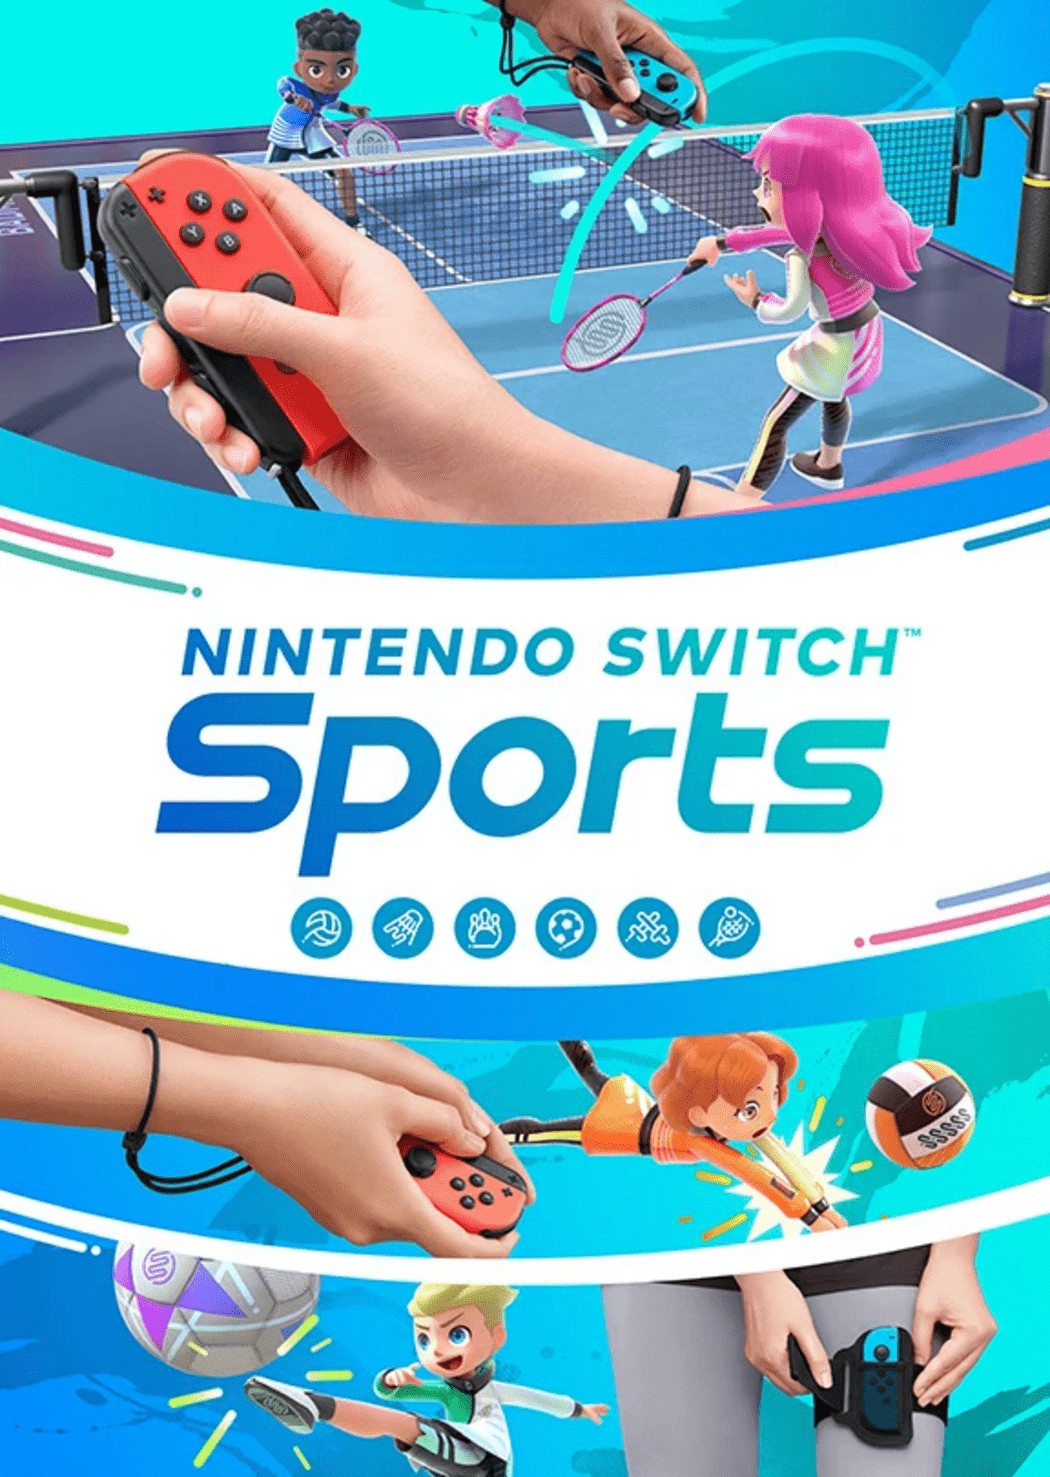 Nintendo Switch Sports  - Nintendo Switch Games